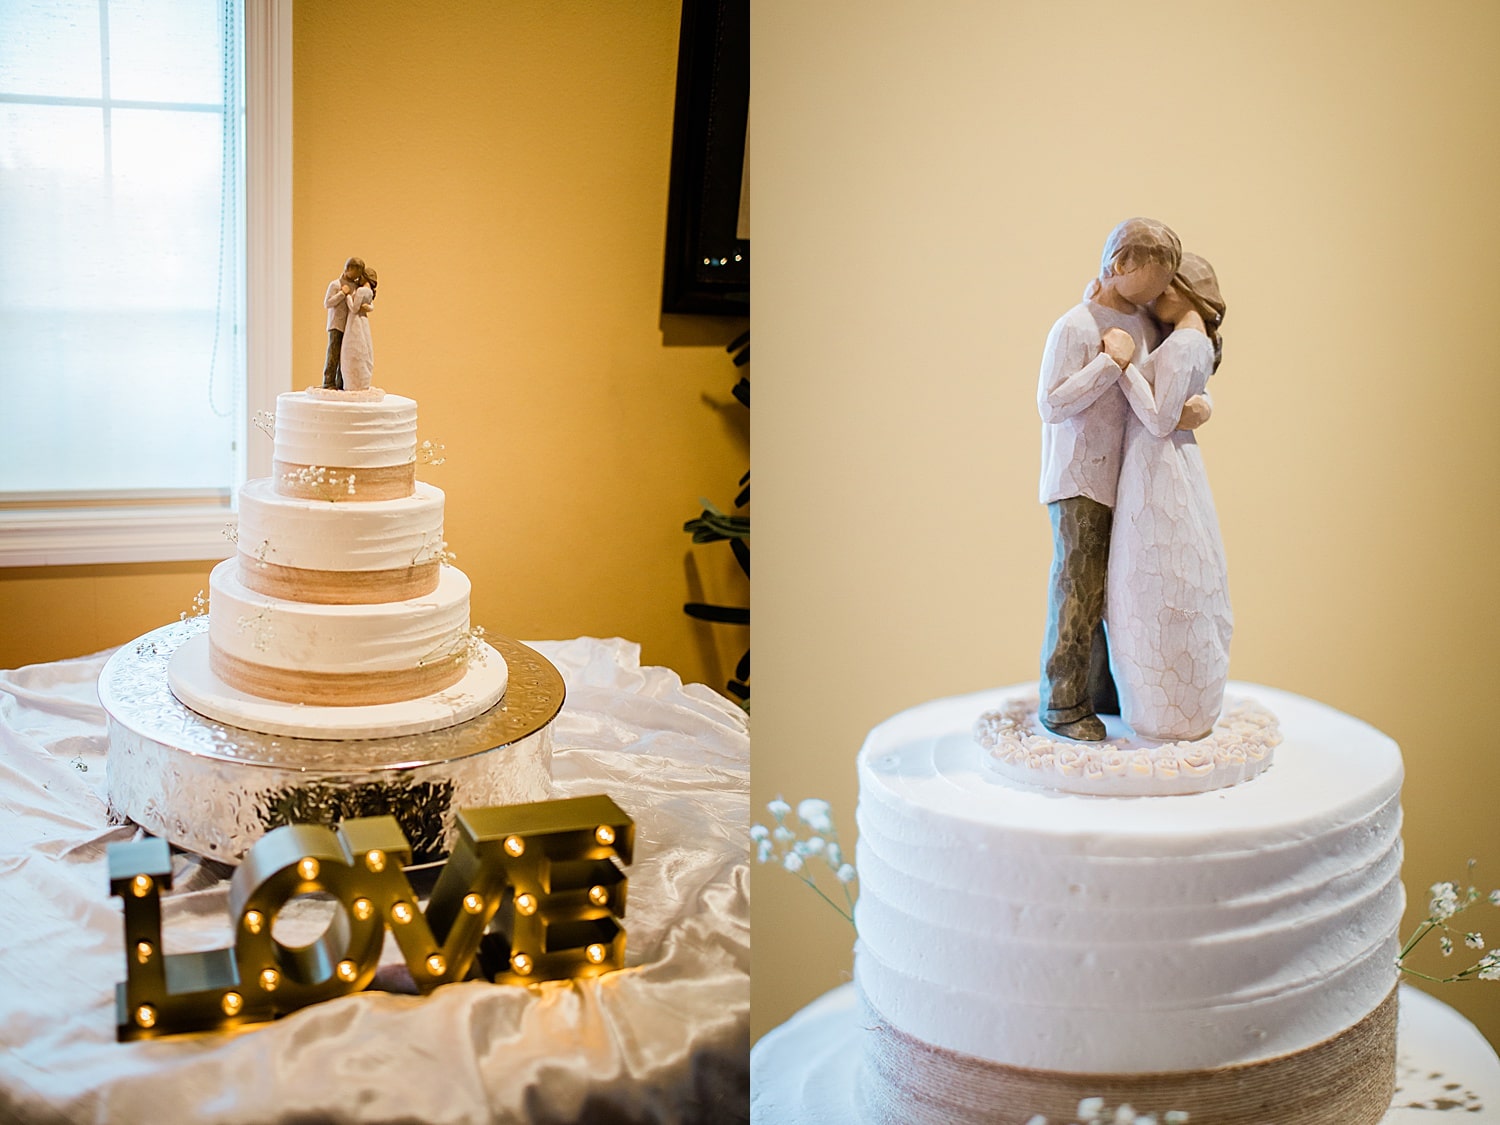 cake details the wedding at the villa in Orange